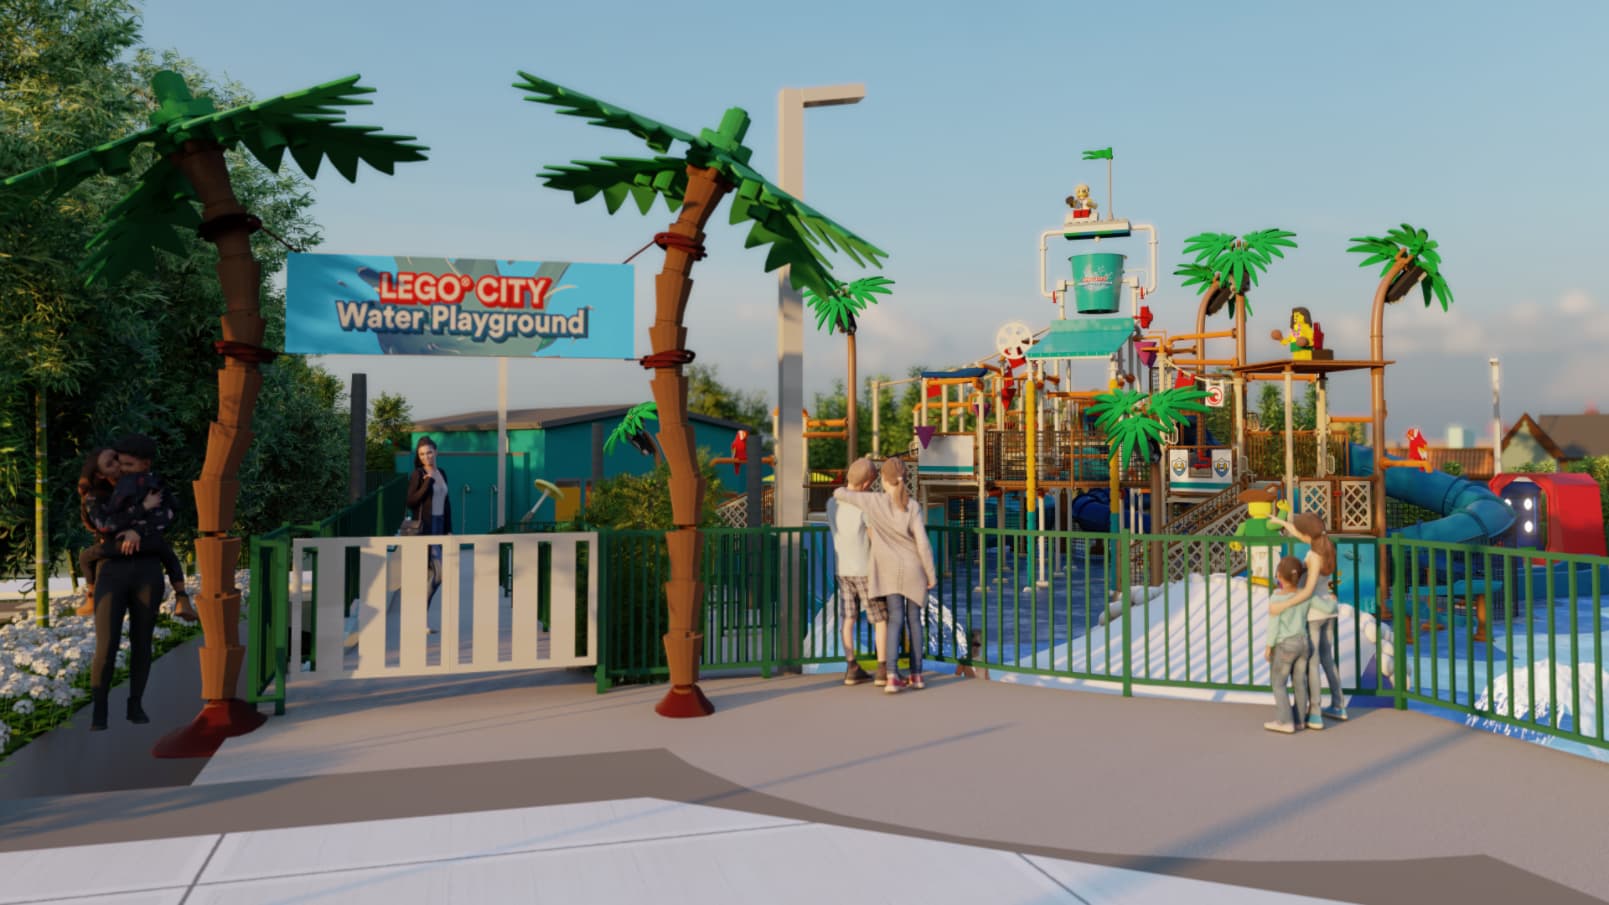 LEGO City Water Playground Entrance